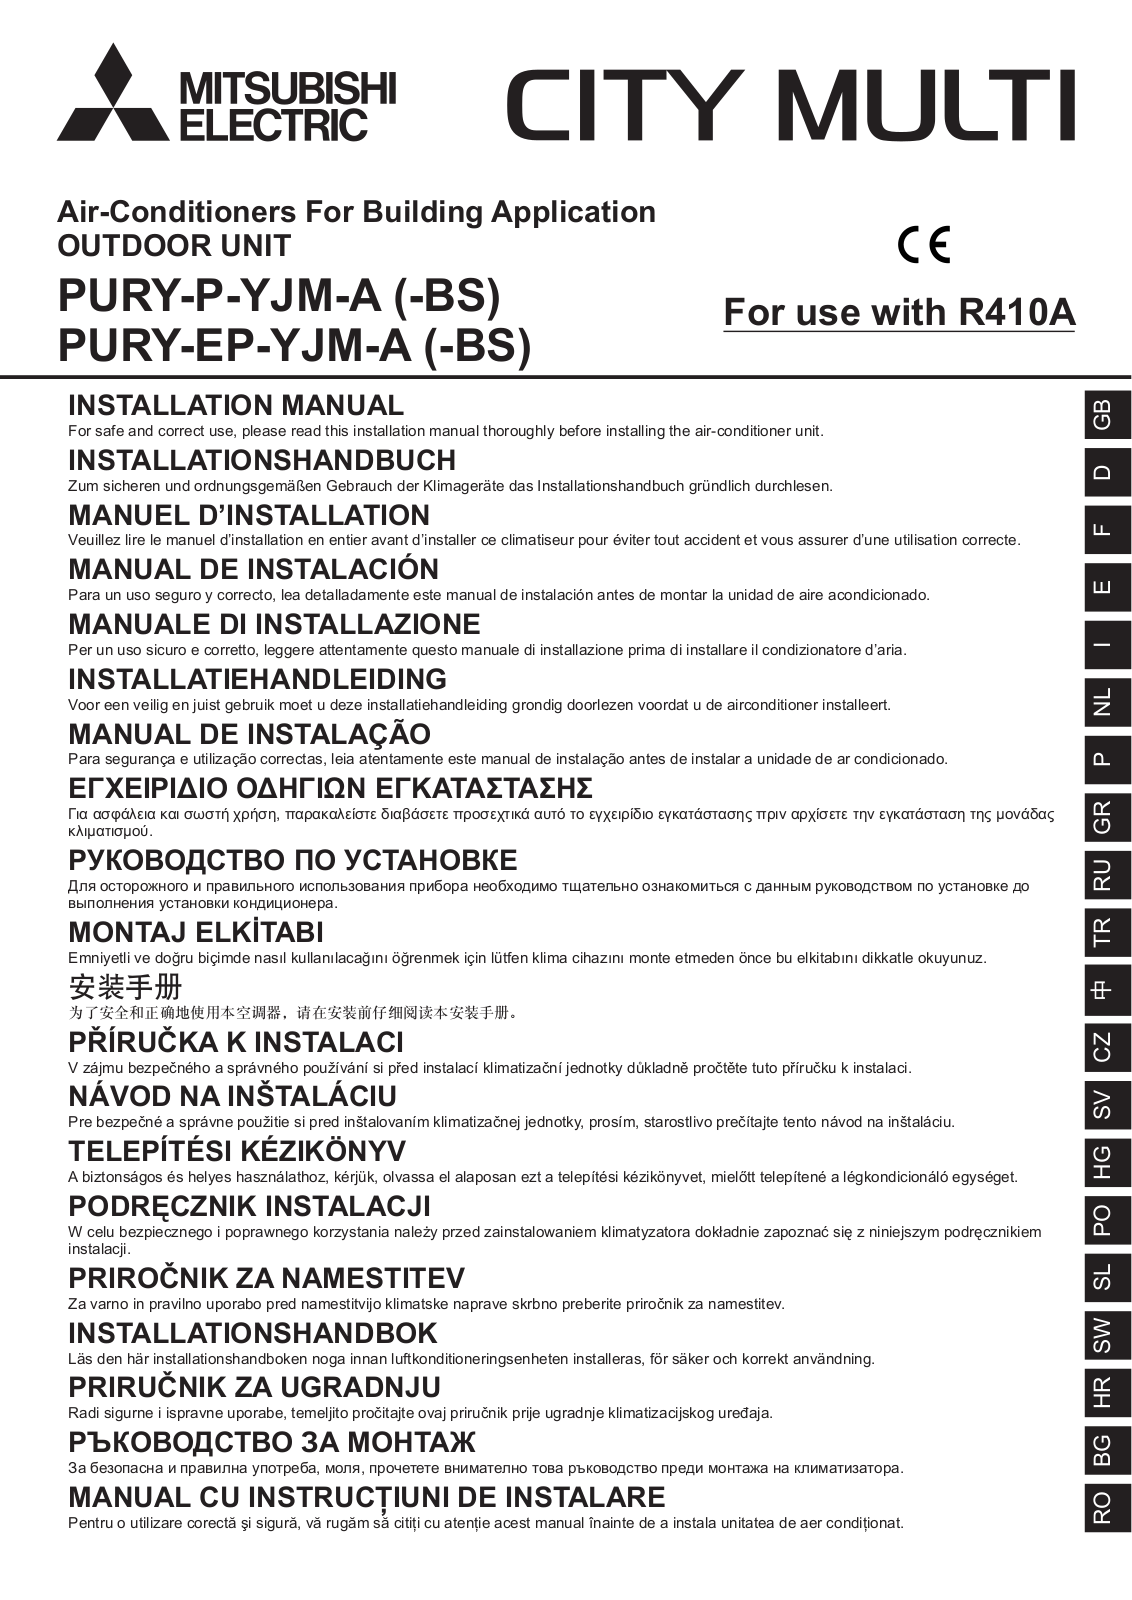 Mitsubishi Electric PURY-P450YSJM-A, PURY-EP250YJM-A, PURY-EP350YJM-A, PURY-P350YJM-A, PURY-P400YSJM-A INSTALLATION MANUAL